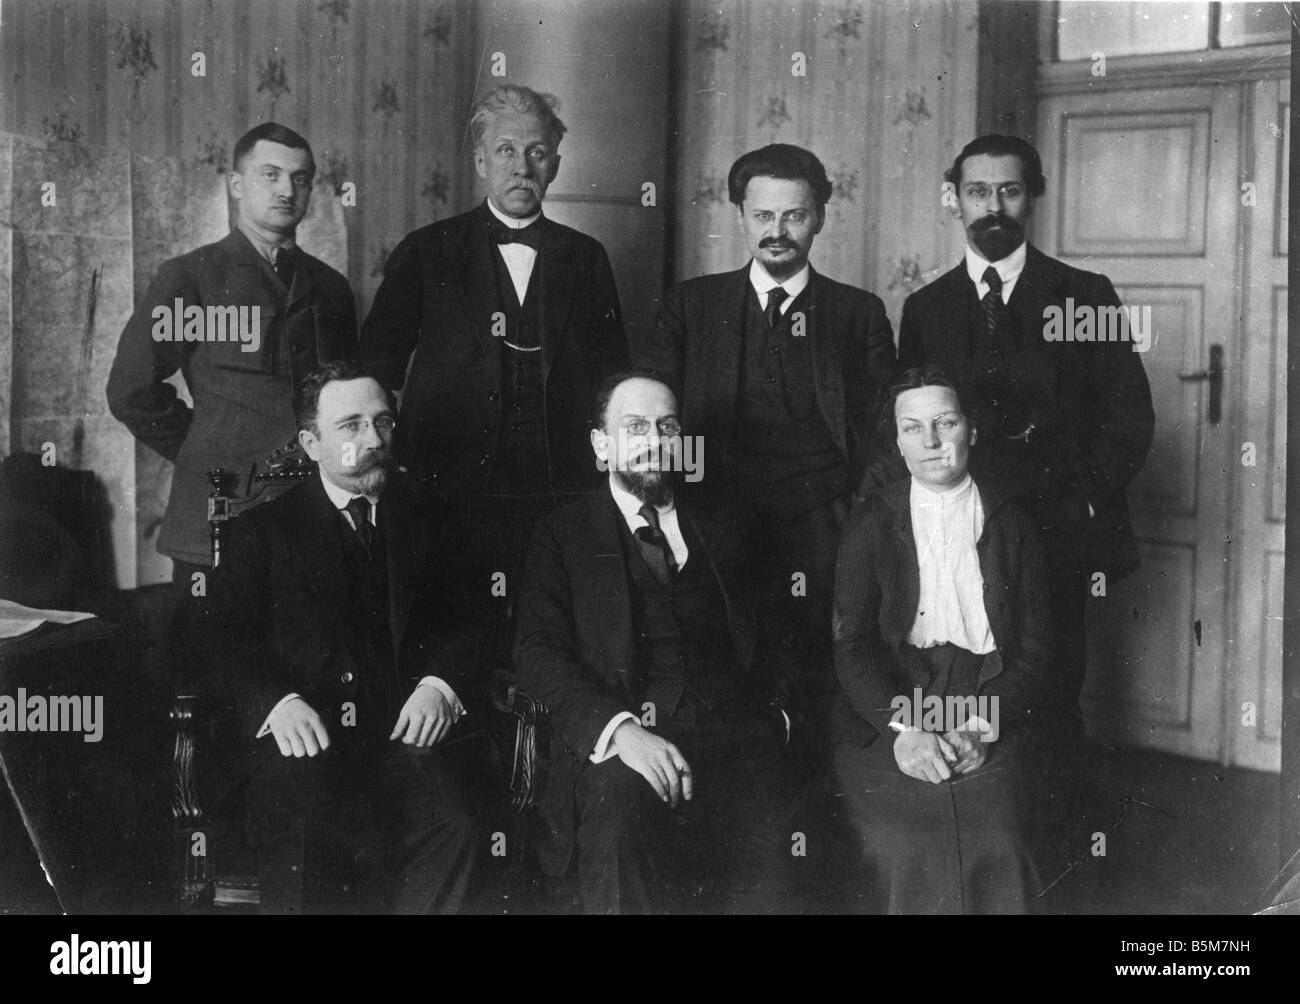 1RD 234 F1917 Trotzky Kamenev Joffe Photo c 1917 Trotzky Leon Davidovich Russian revolutionary and politician 1879 1940 Trotzky Stock Photo